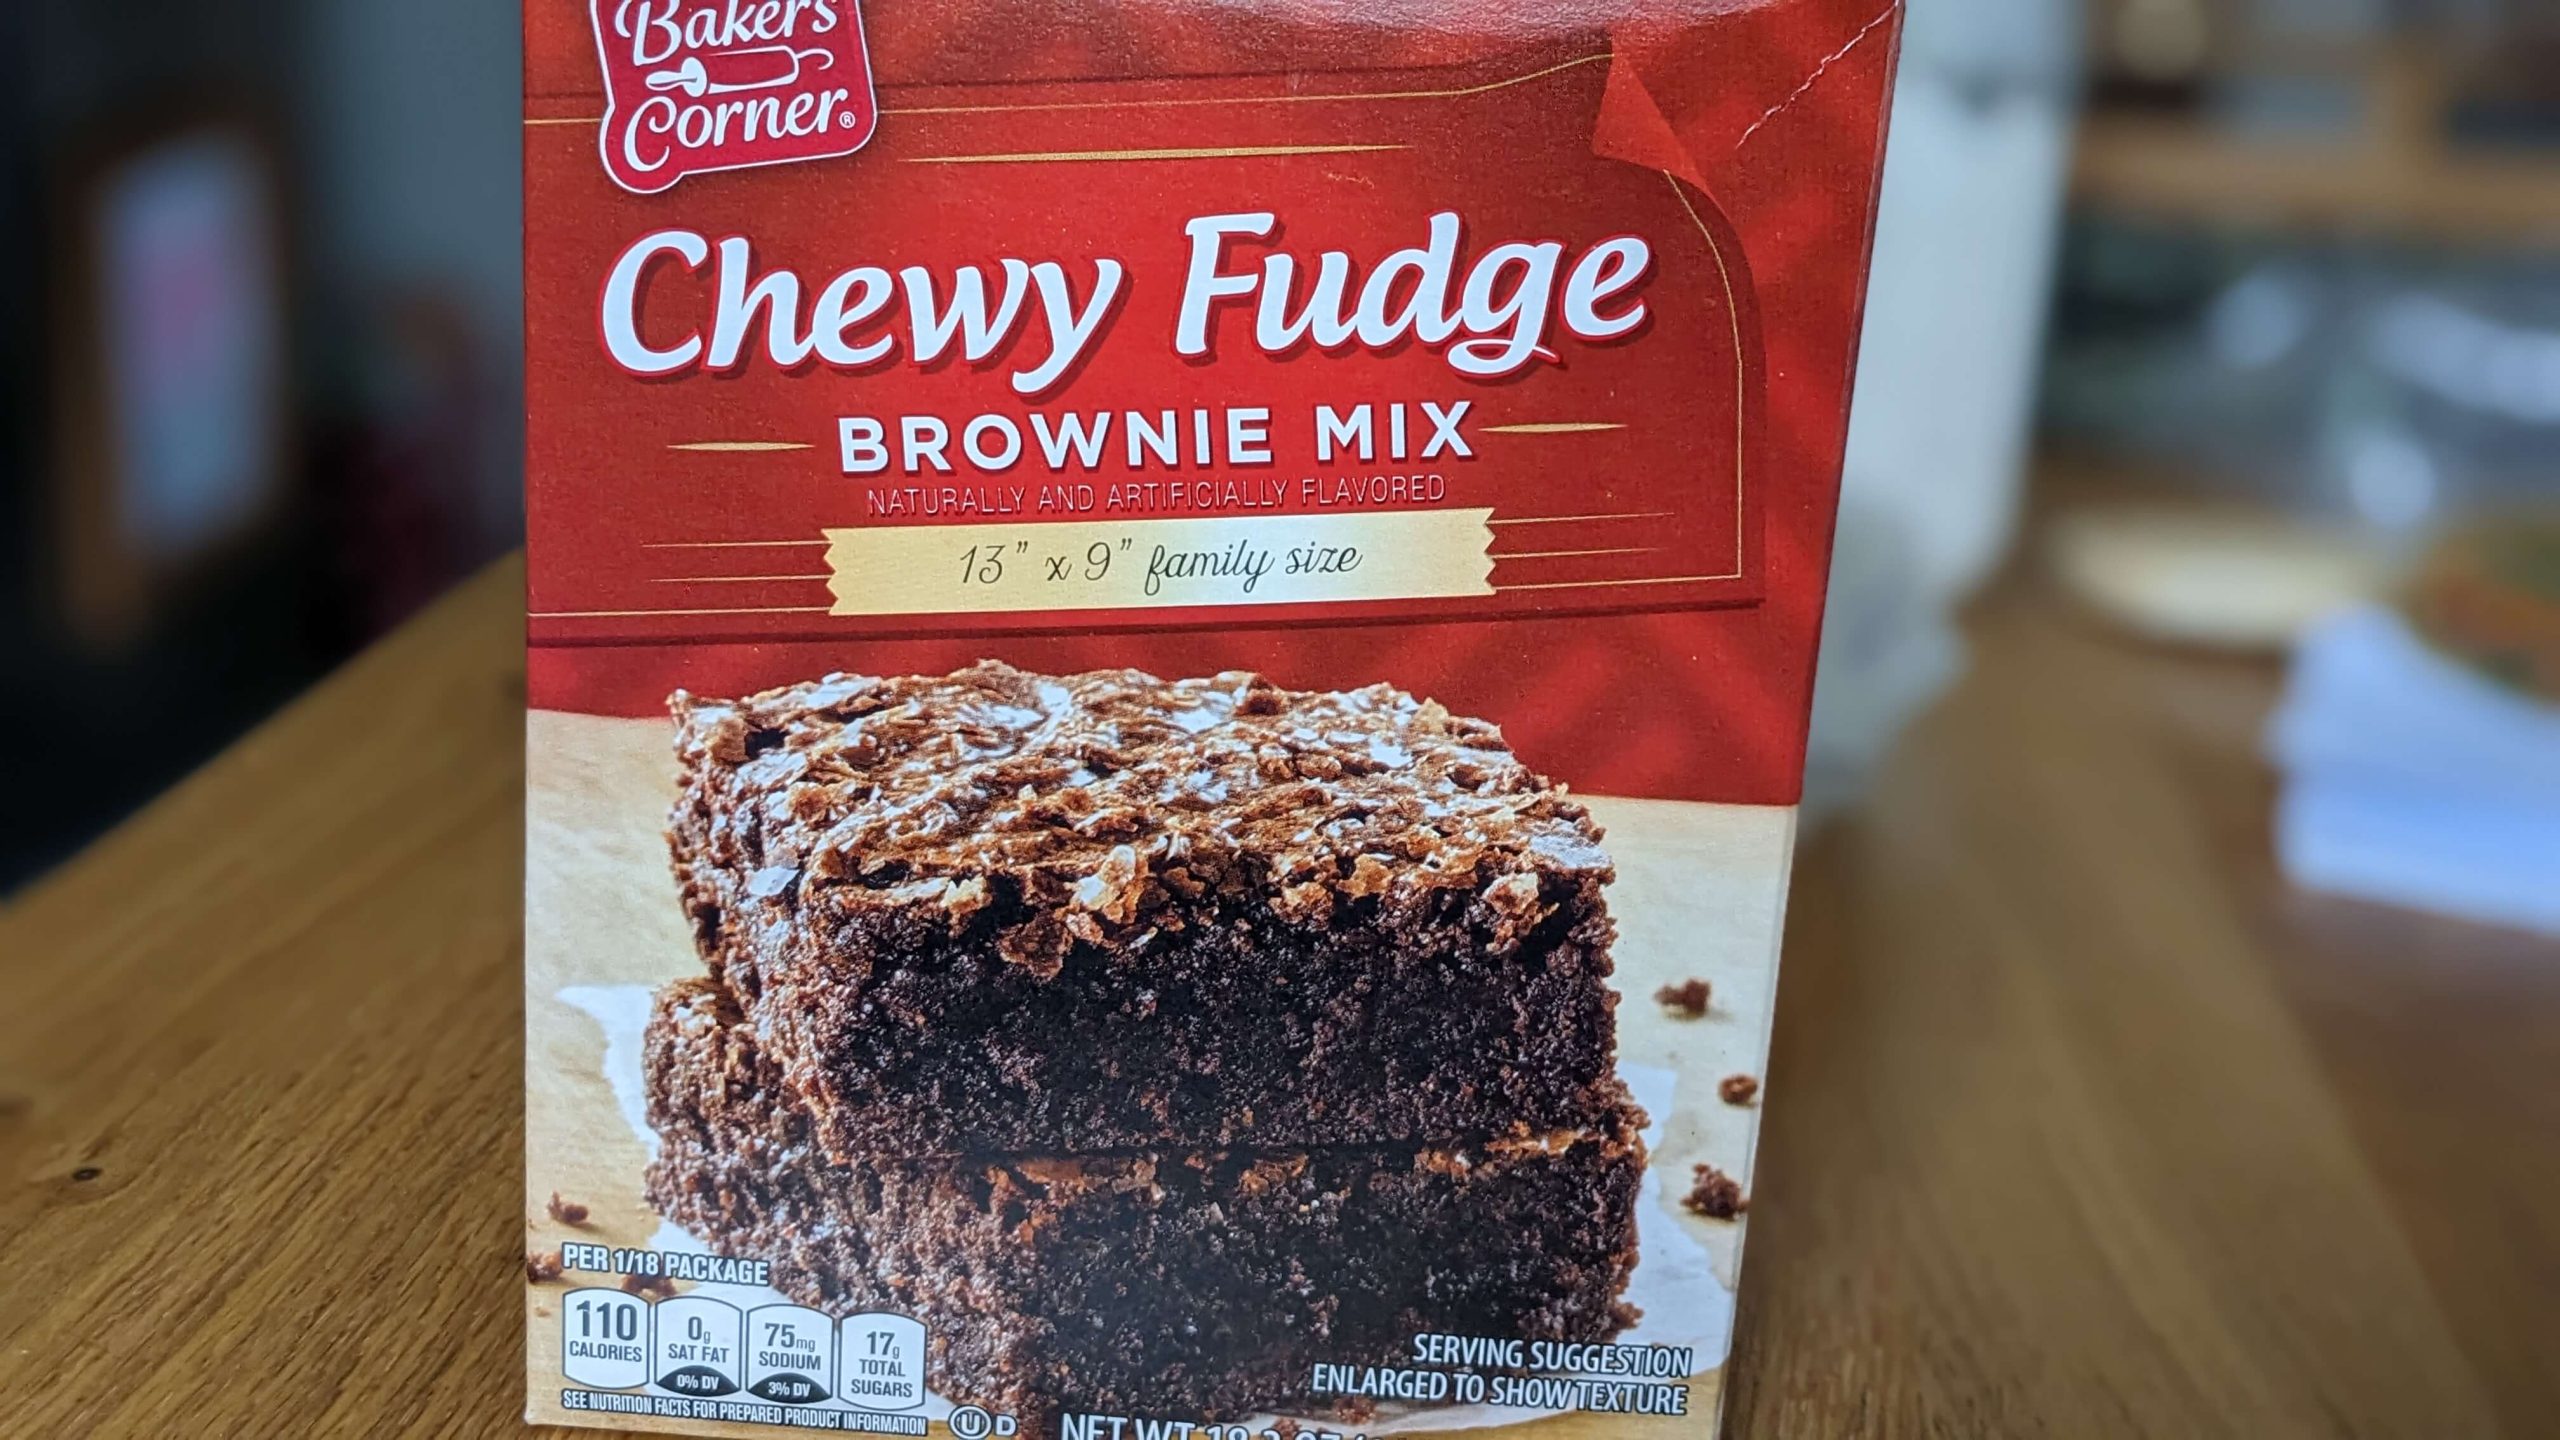 baker's corner chewy fudge brownie mix box